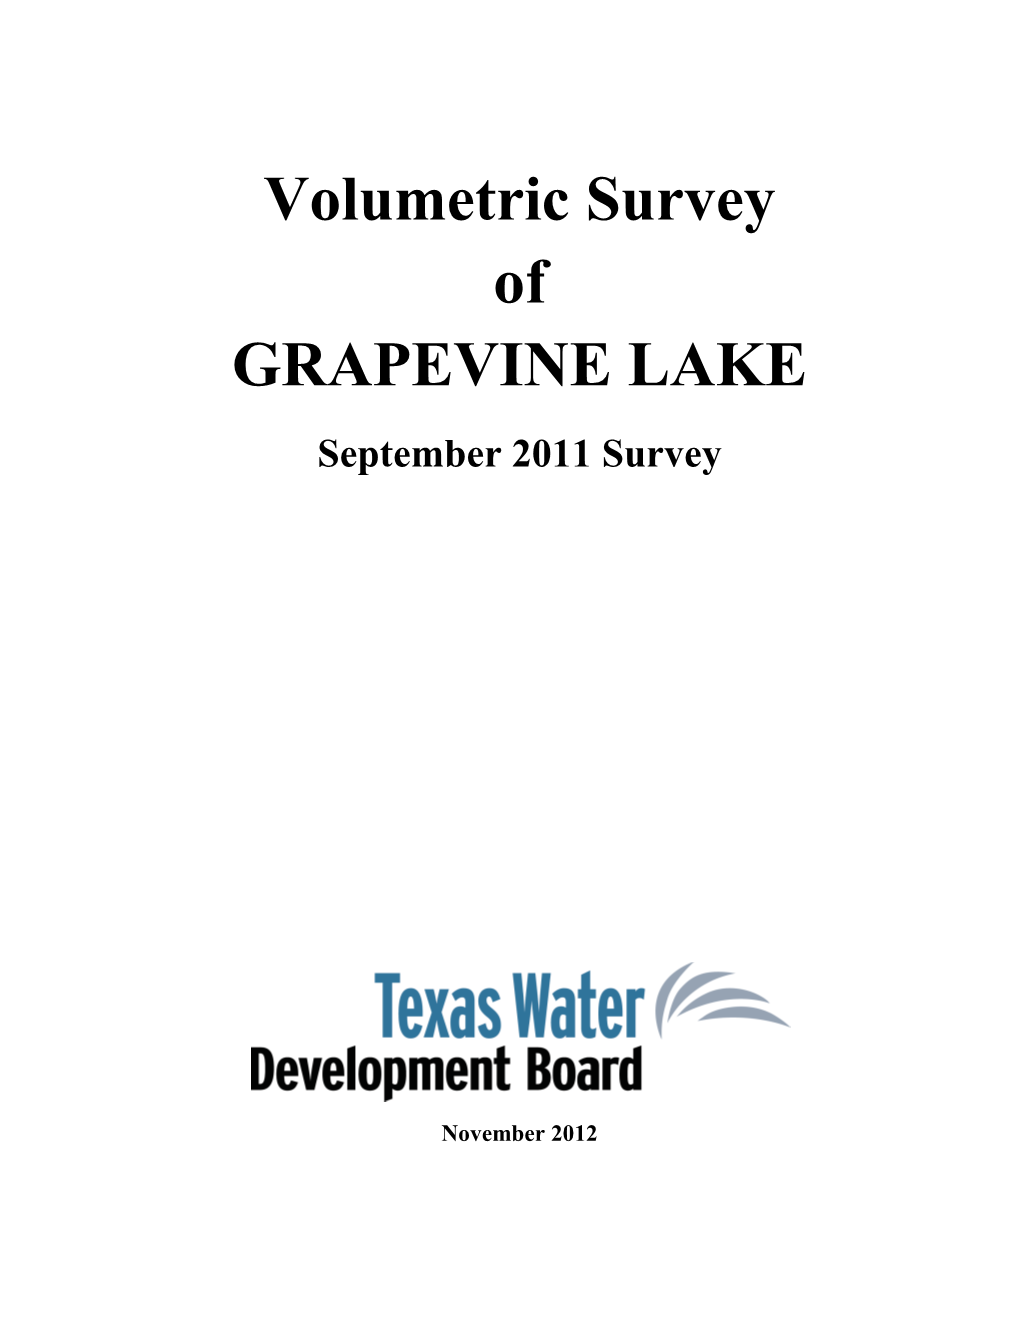 Volumetric Survey of GRAPEVINE LAKE September 2011 Survey